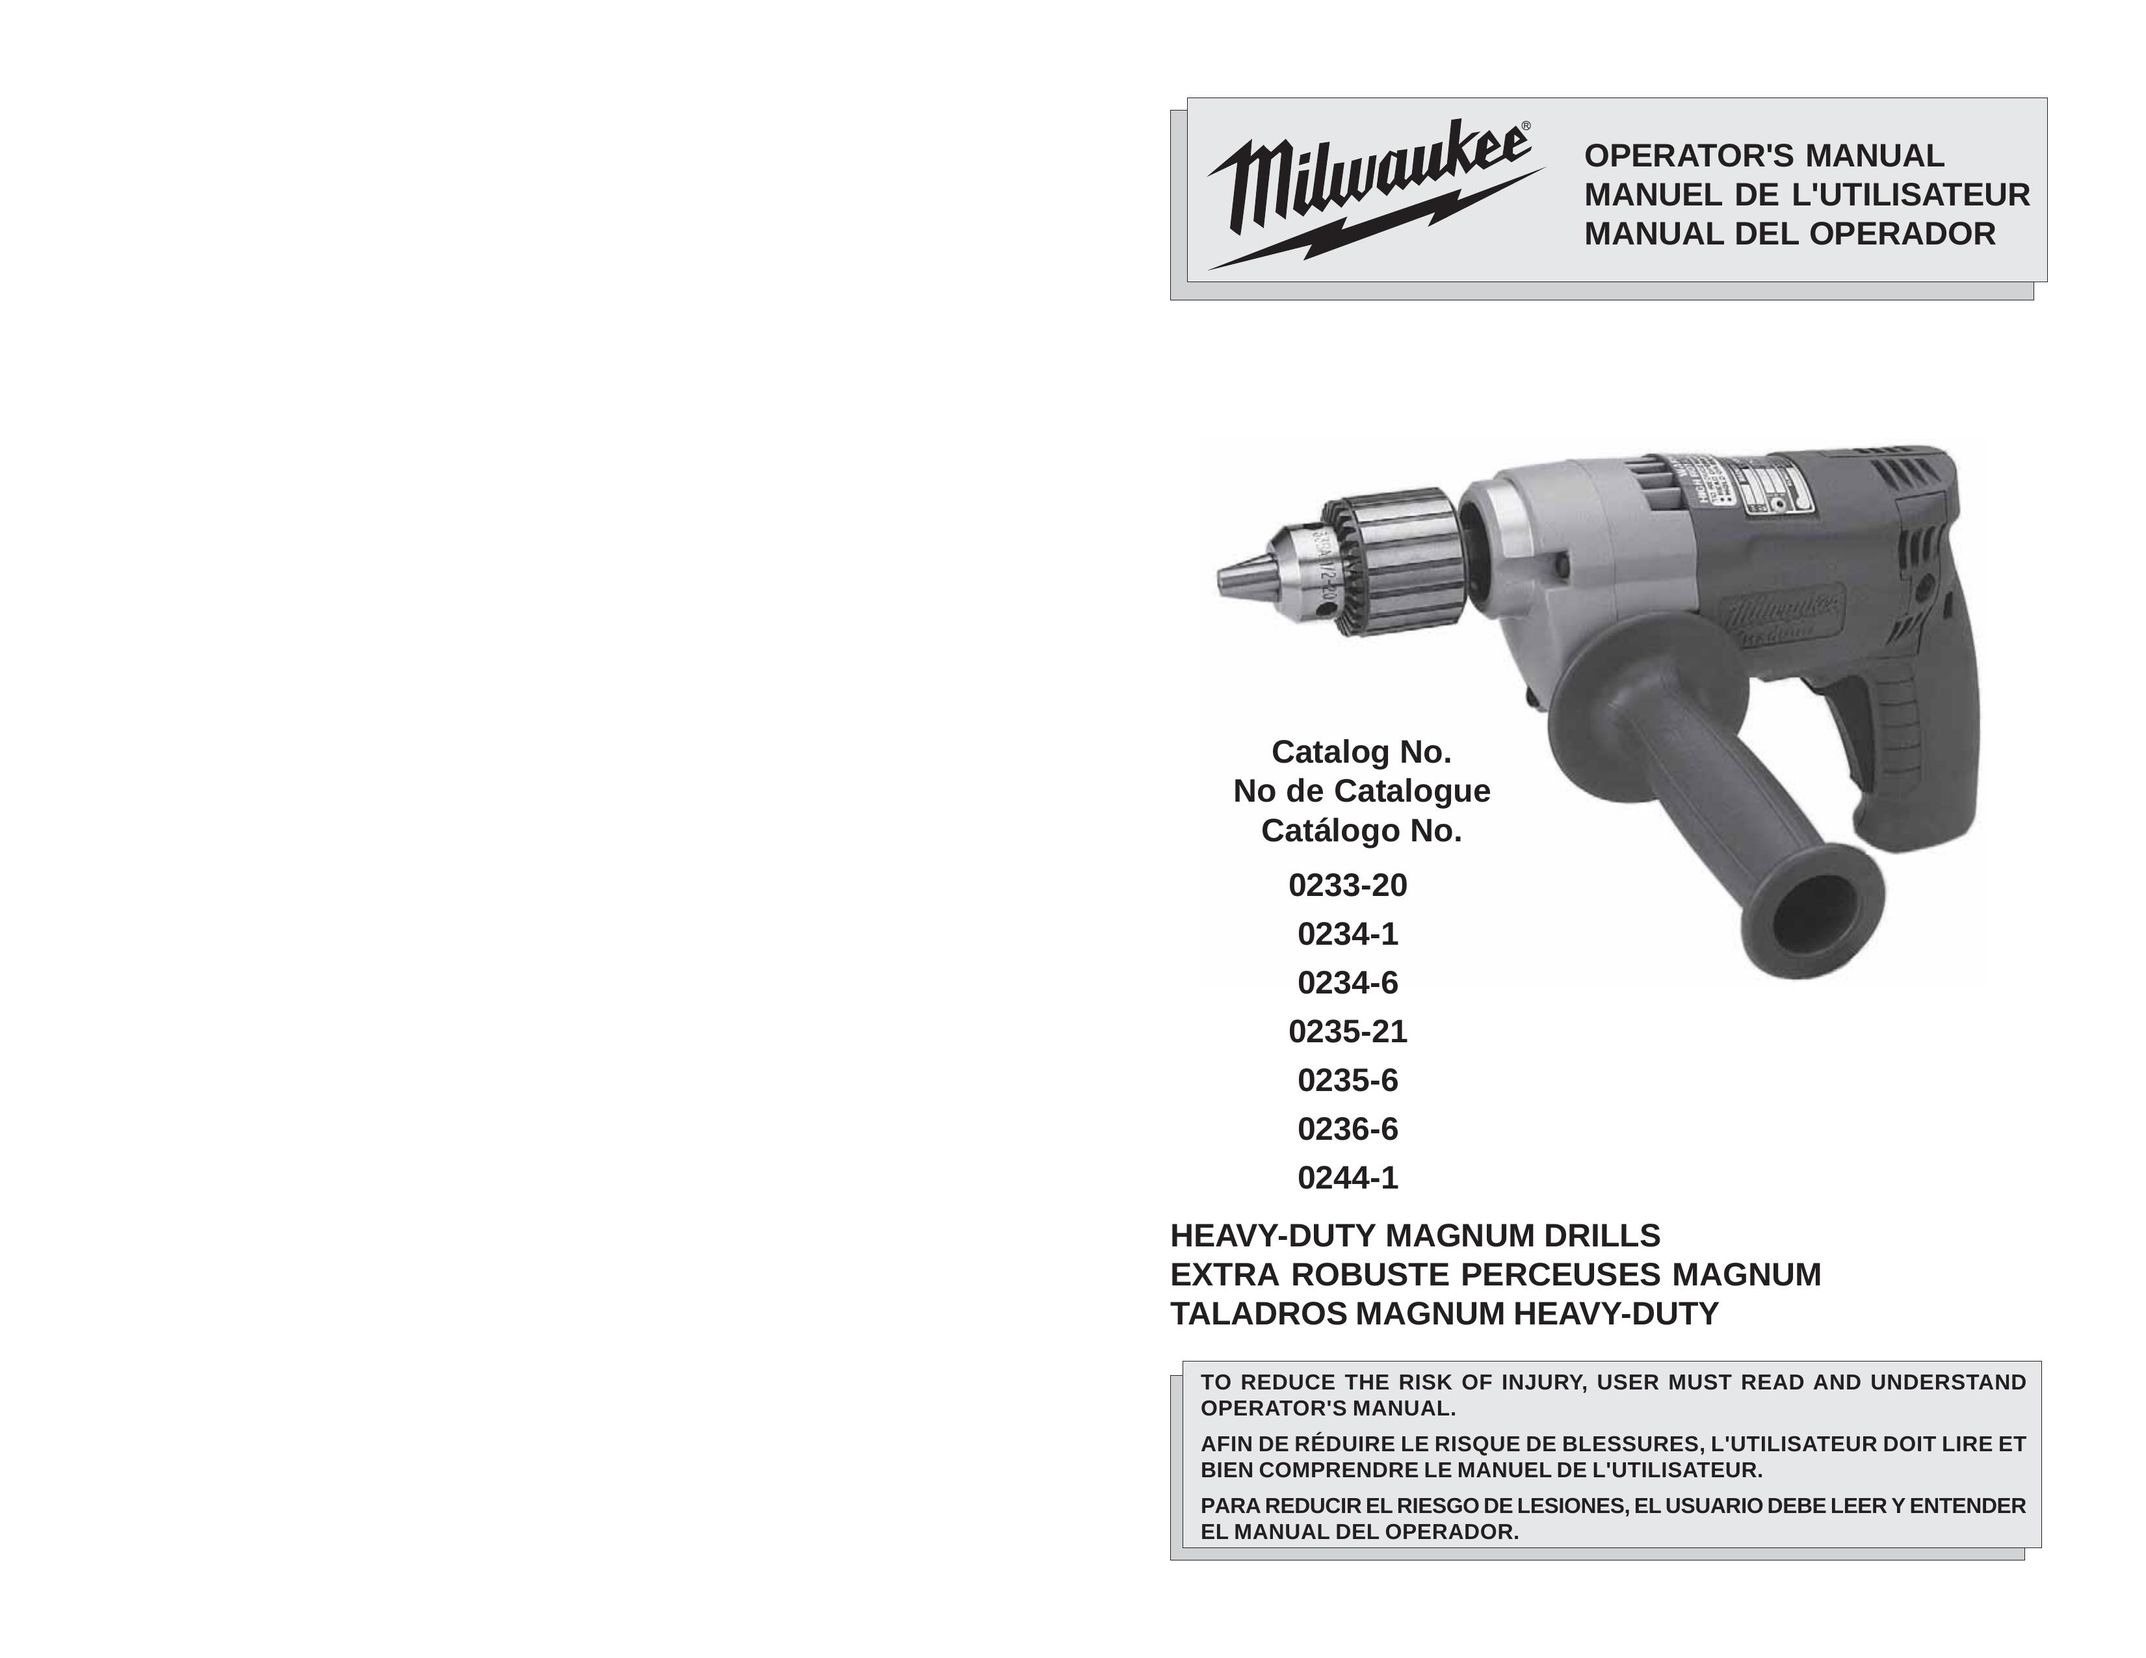 Milwaukee 0235-21 Drill User Manual